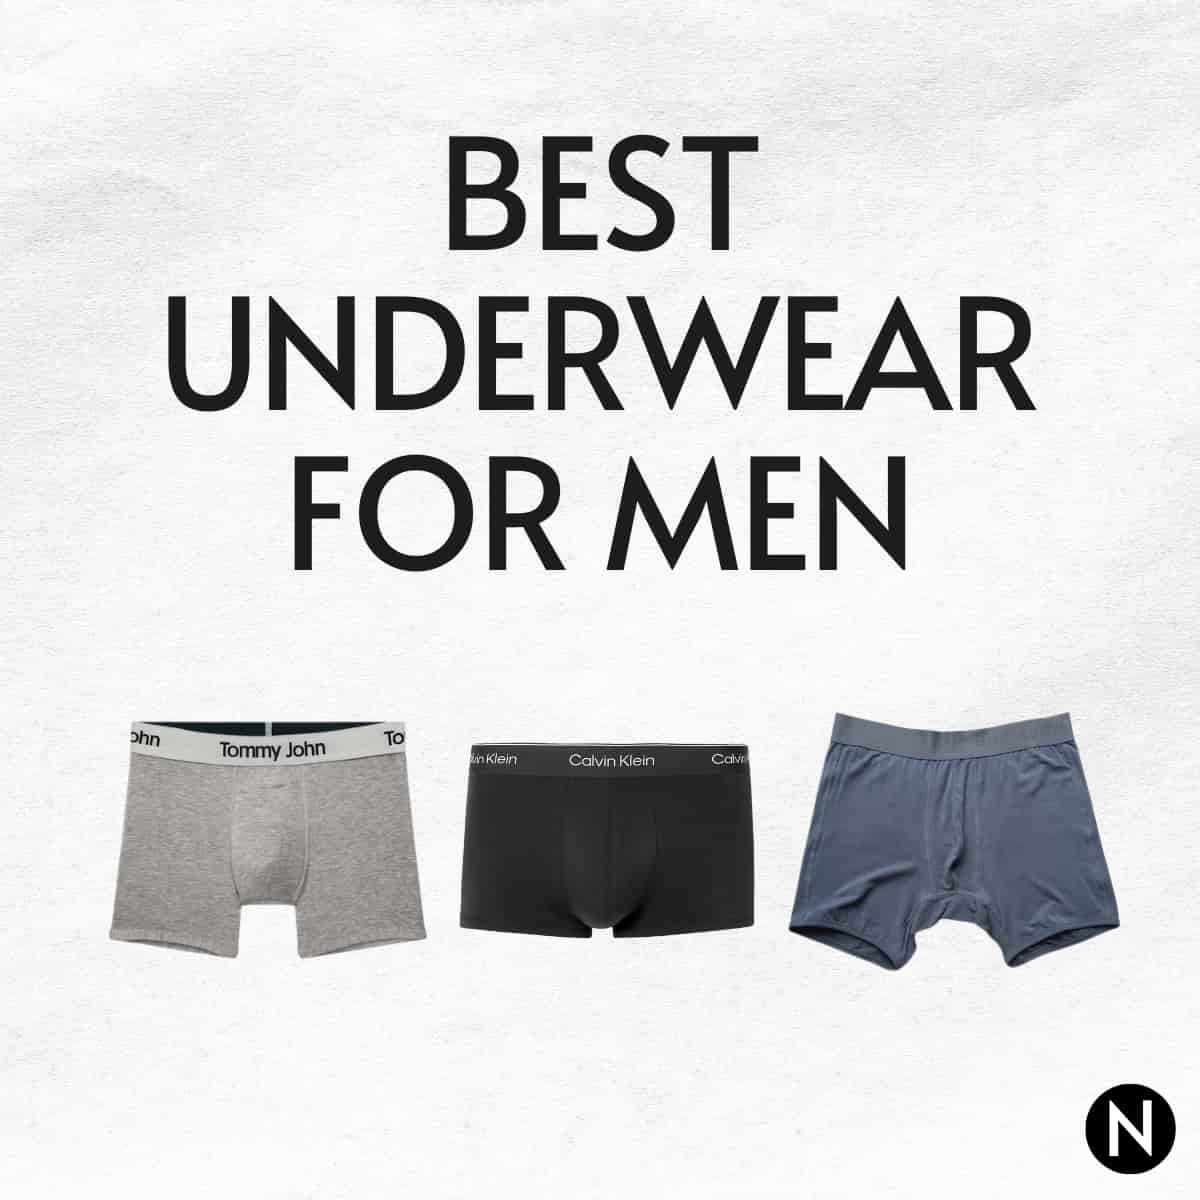 Three pairs of men's underwear.